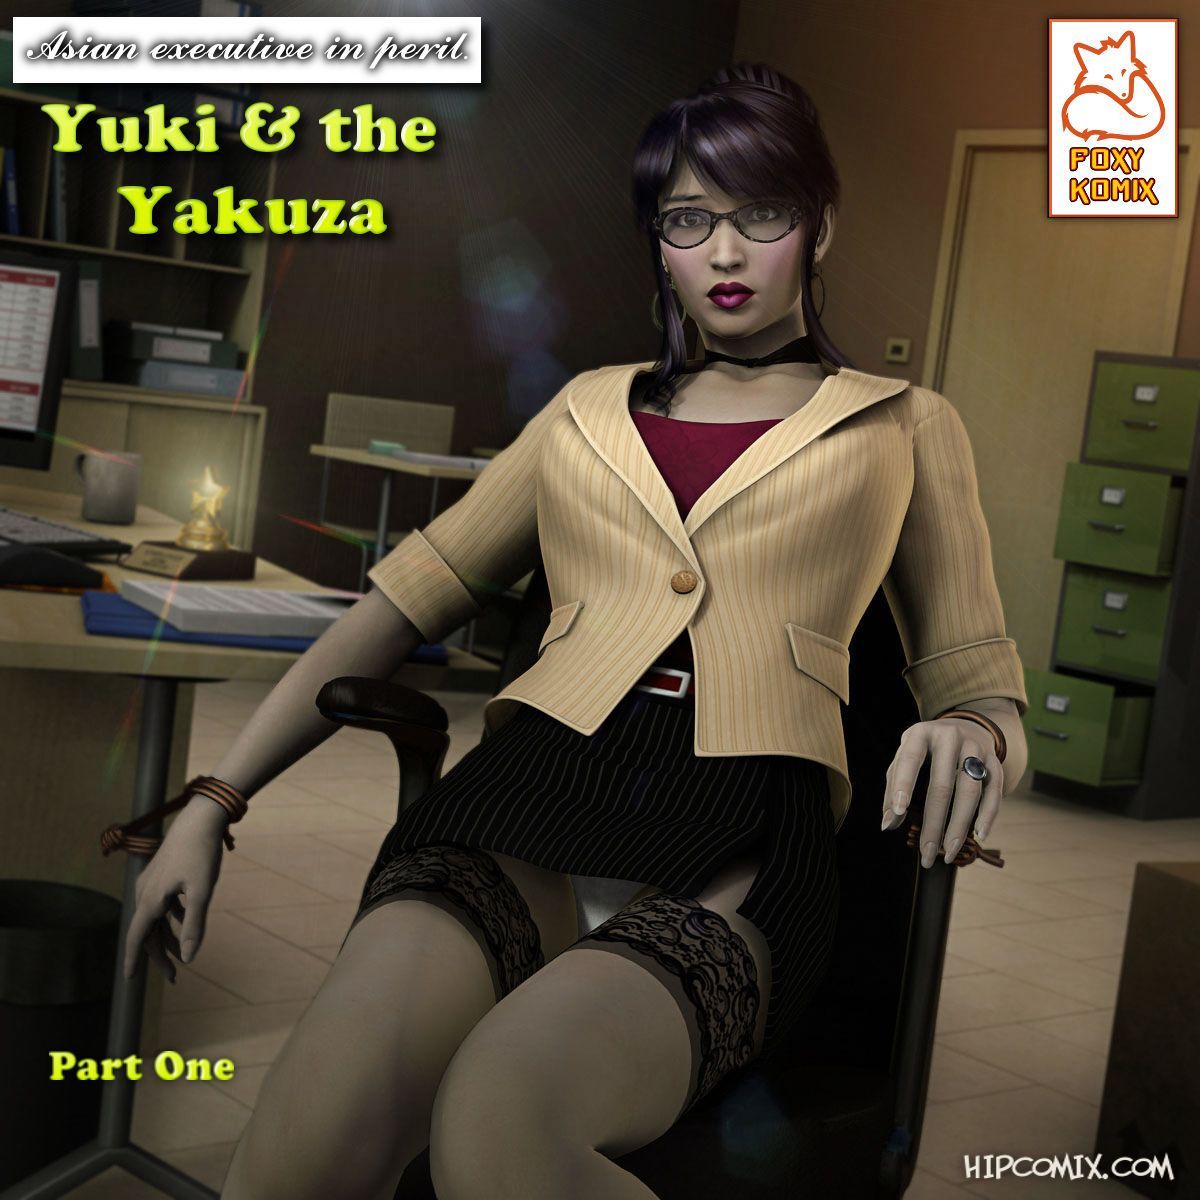 [foxy komix] Yuki en De yakuza 1 2